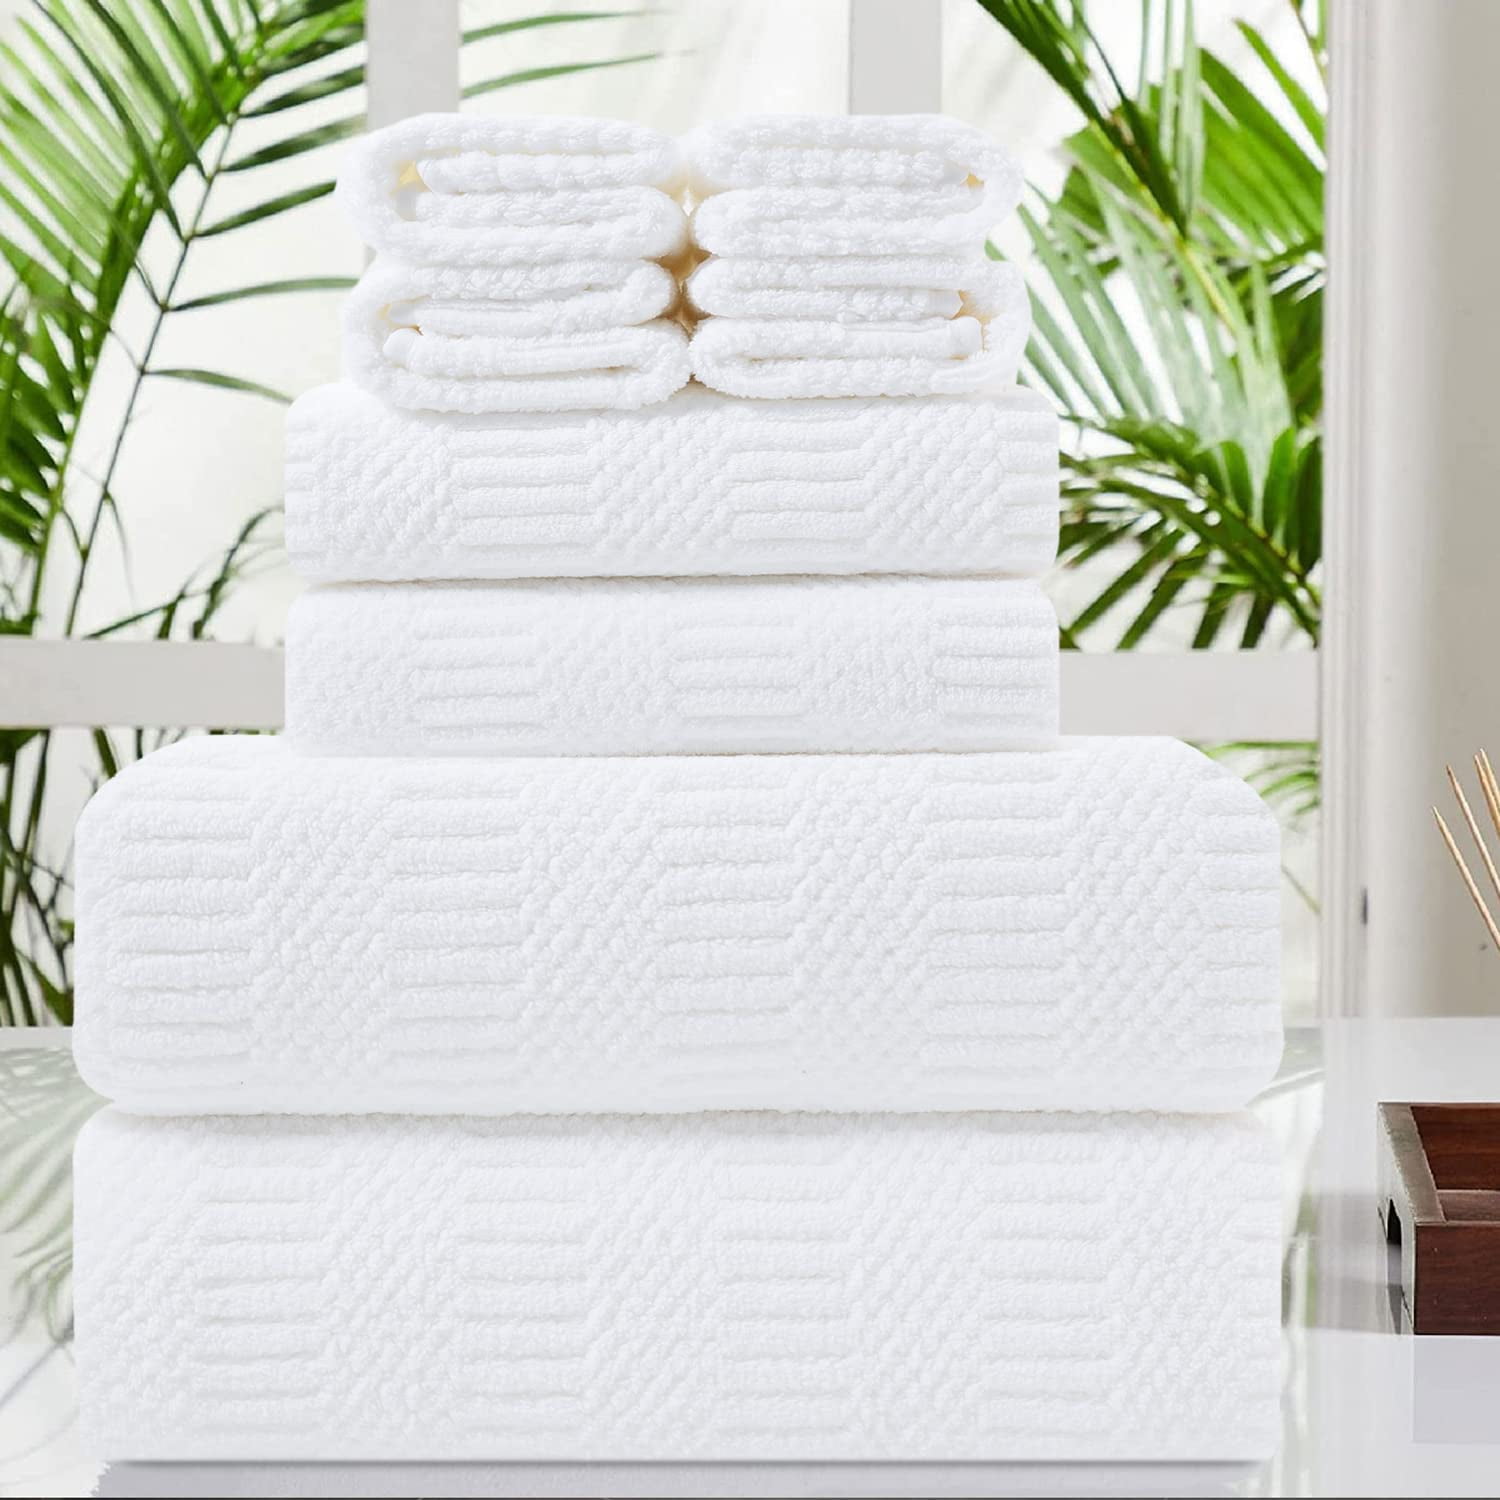 Jessy Home 8 Piece Oversized White Bath Towel Set-2 Extra Large